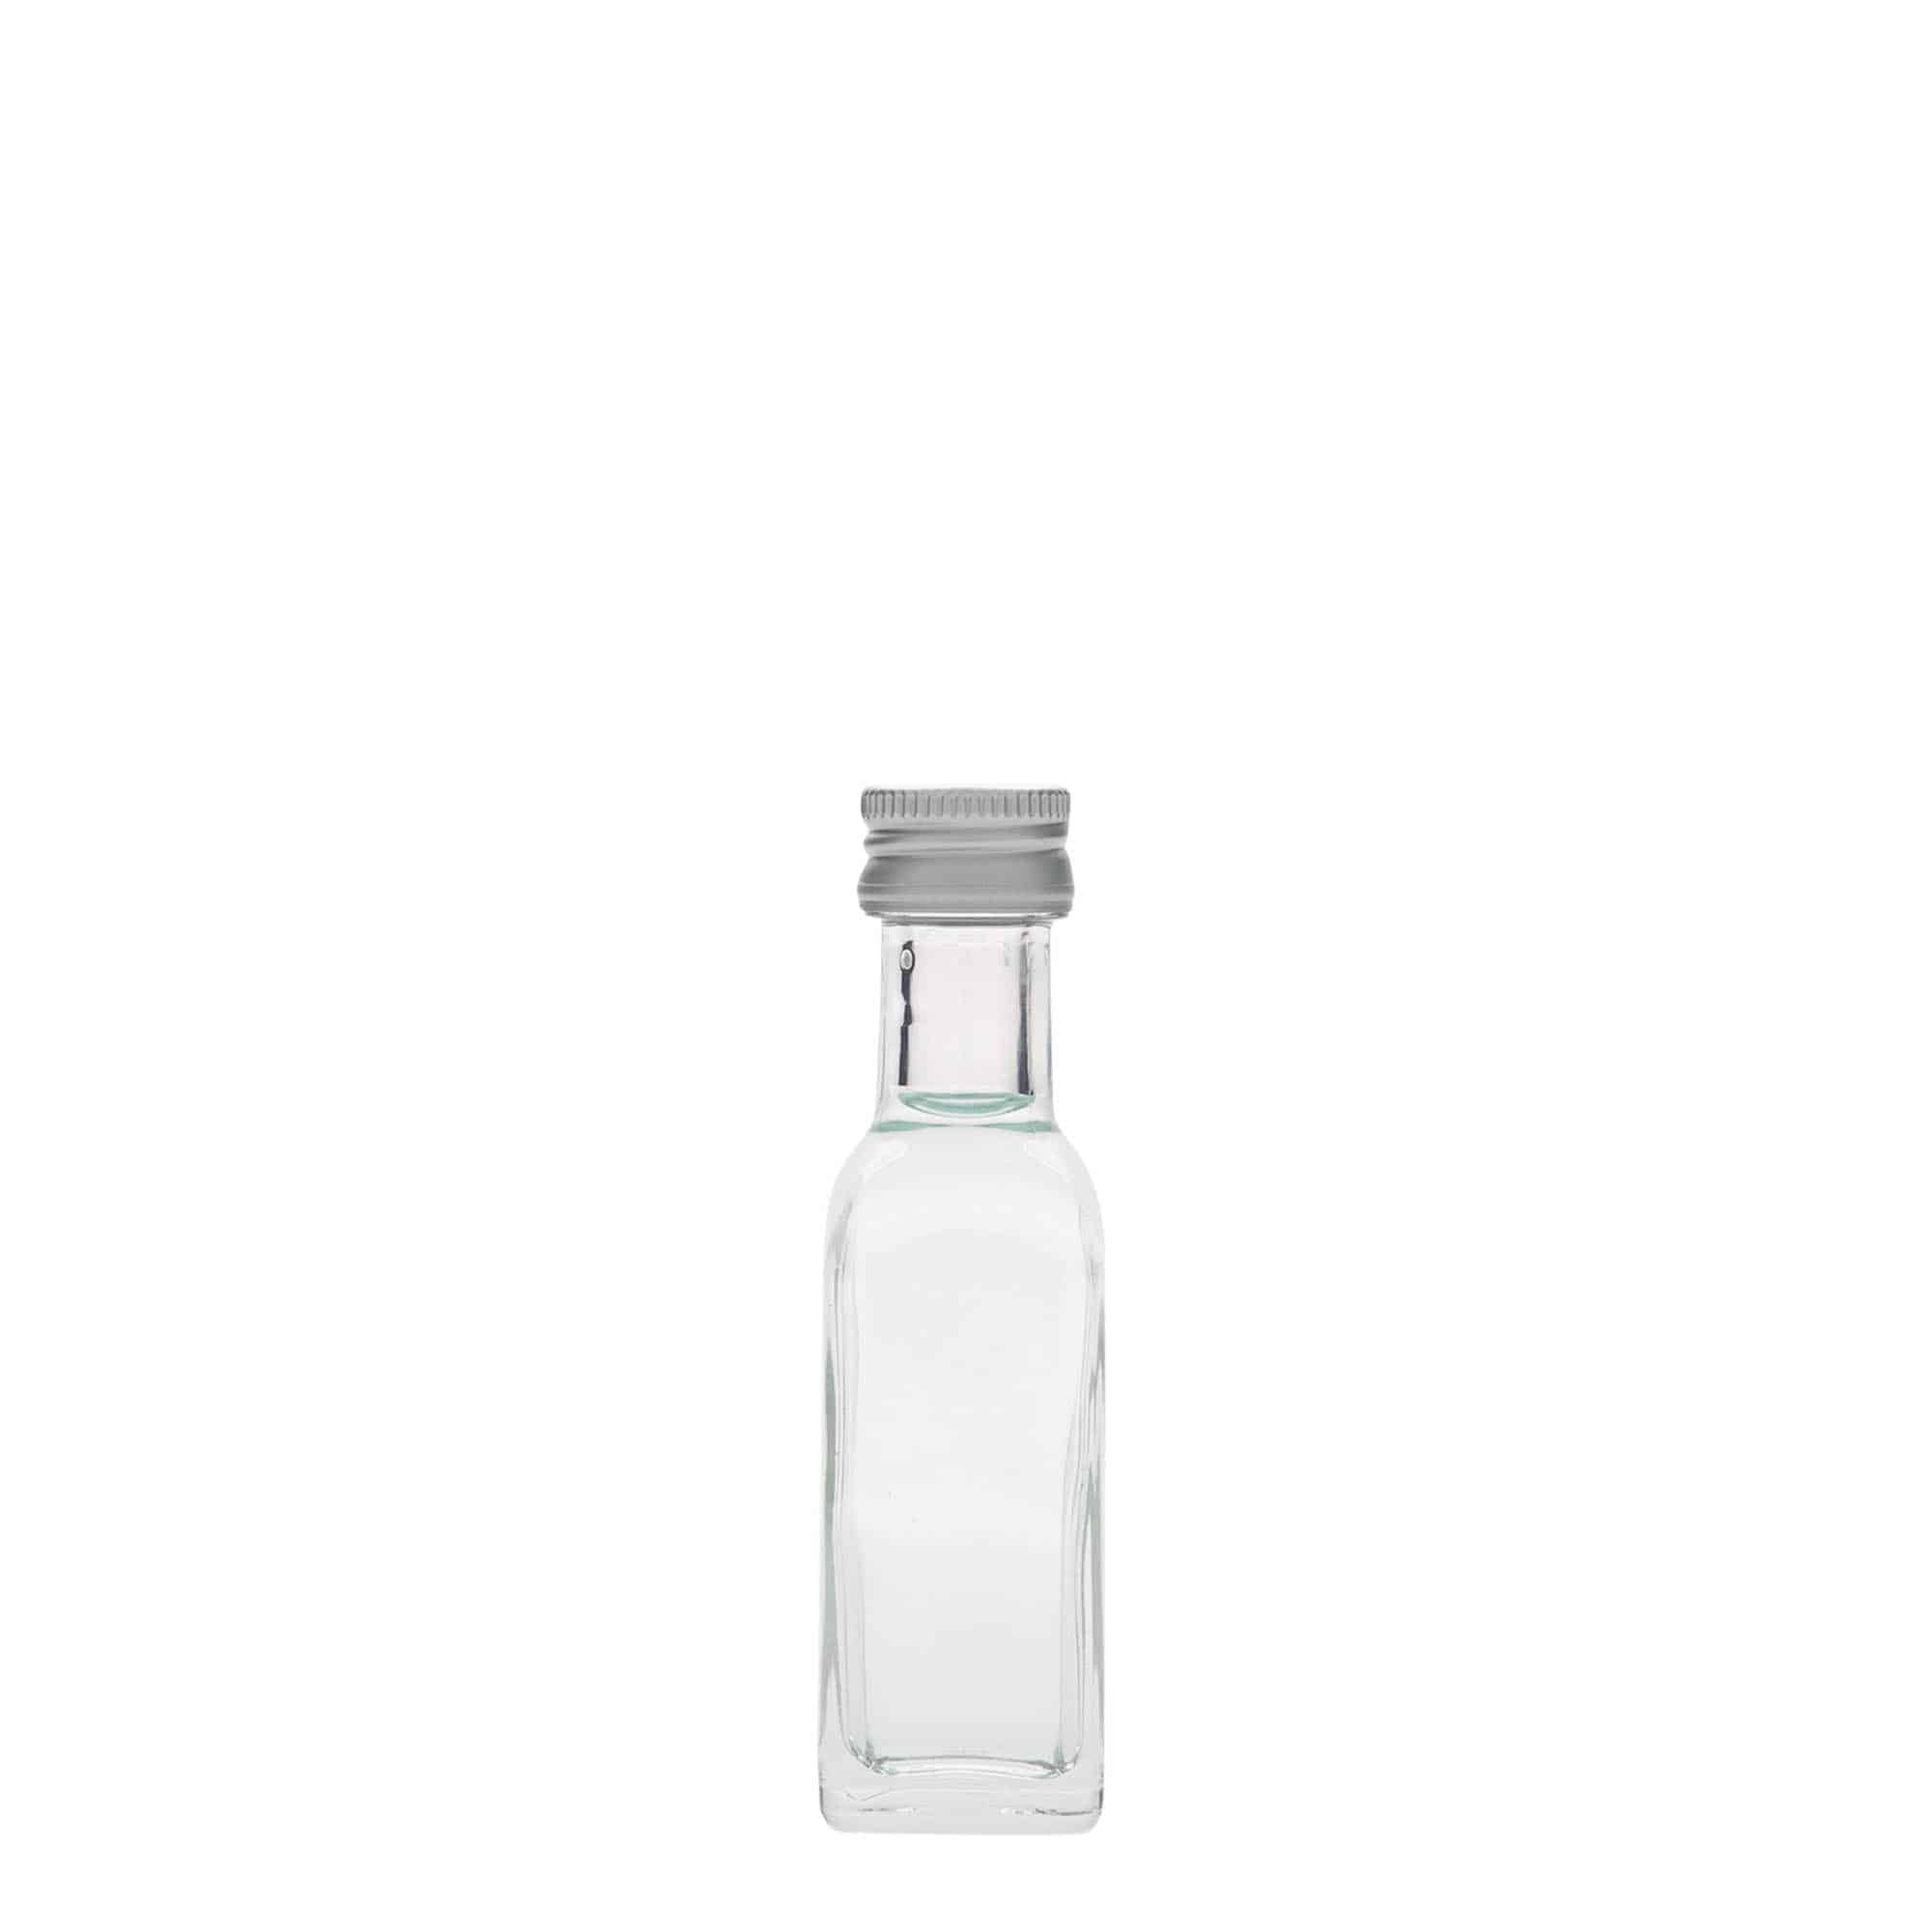 20 ml glass bottle 'Marasca', square, closure: PP 18